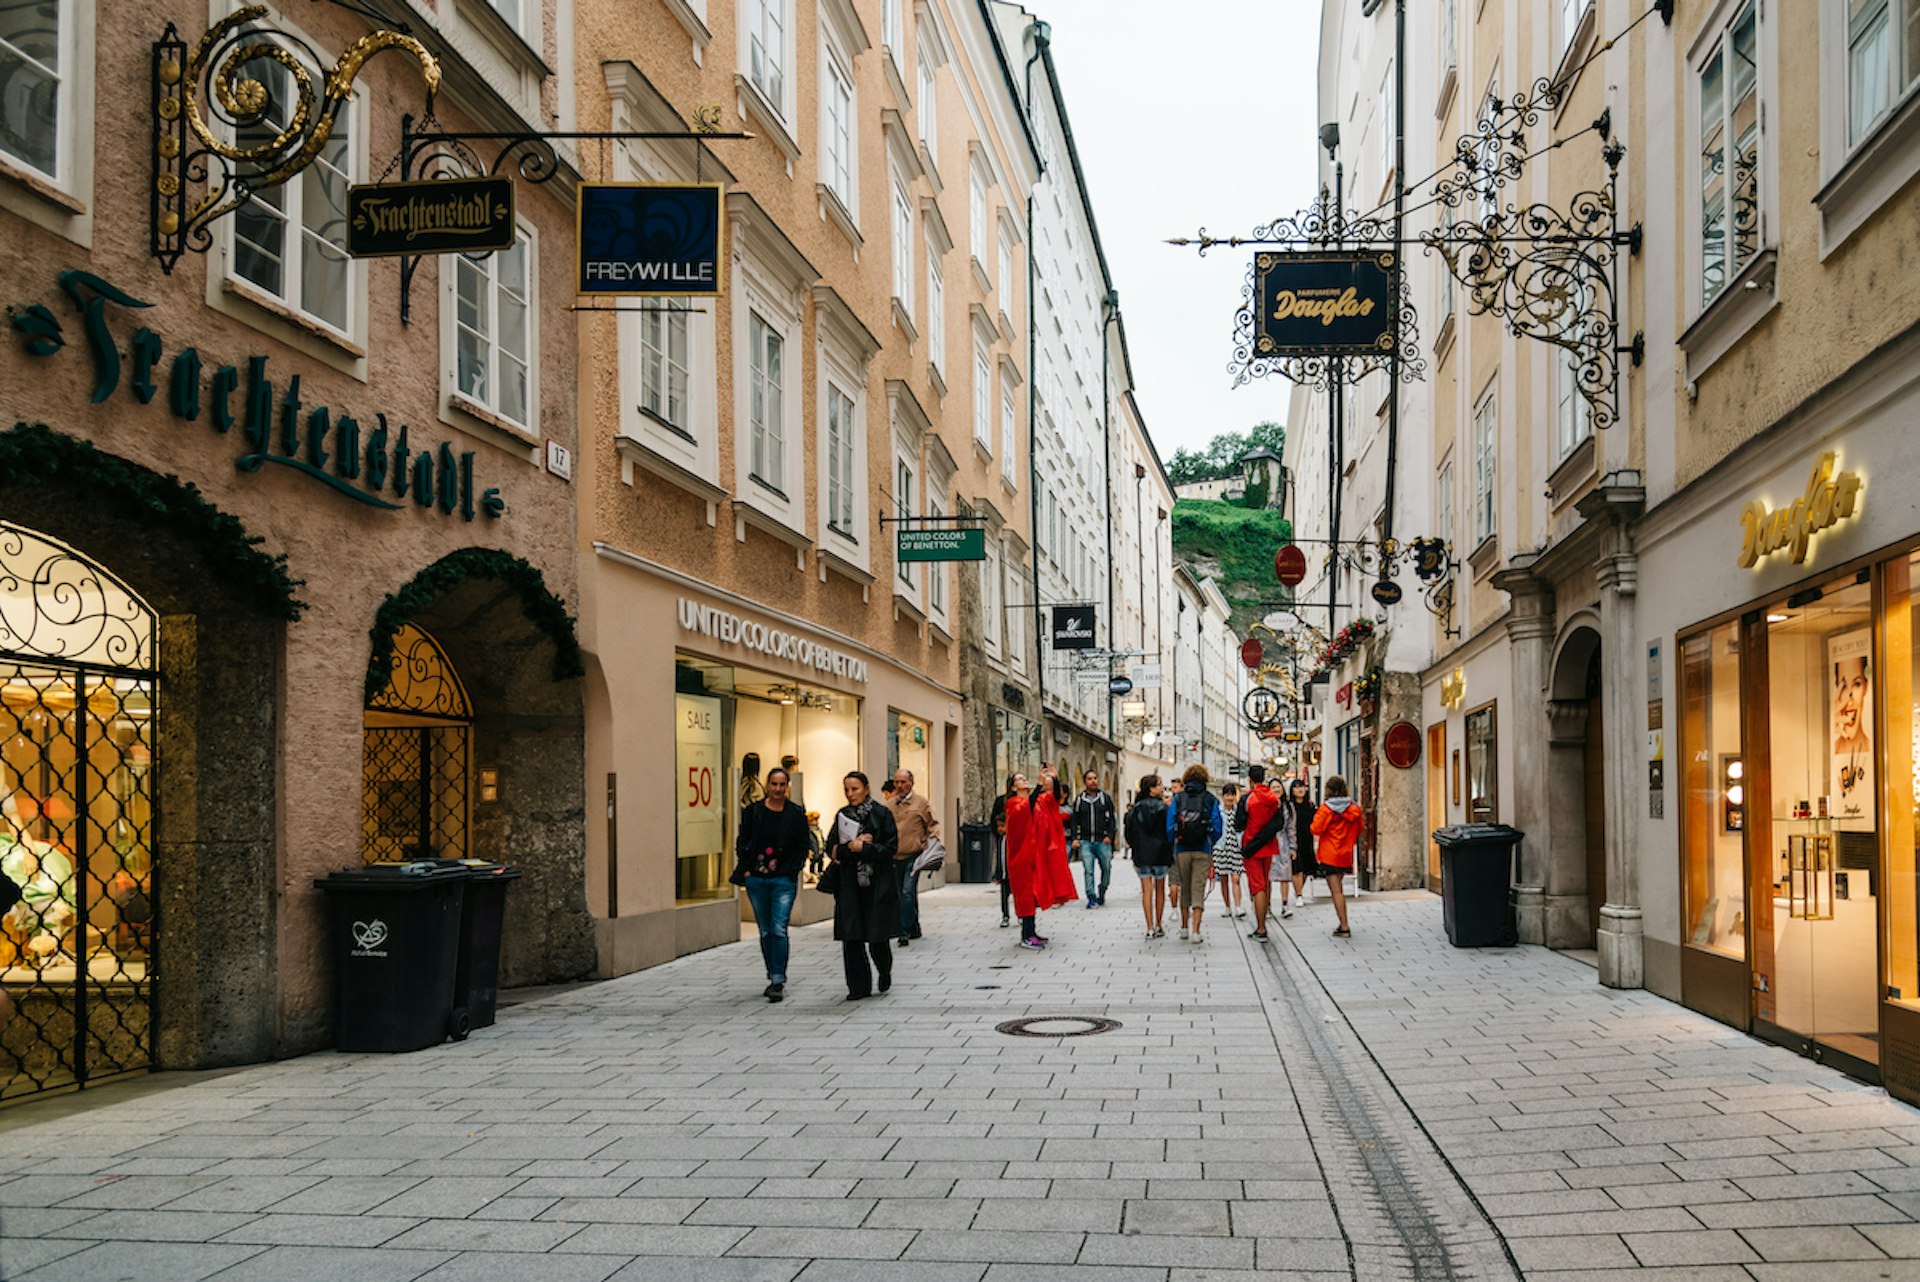 Pedestrians walk by shops on the car-free Getreidegasse in the historic old town of Salzburg, Austria